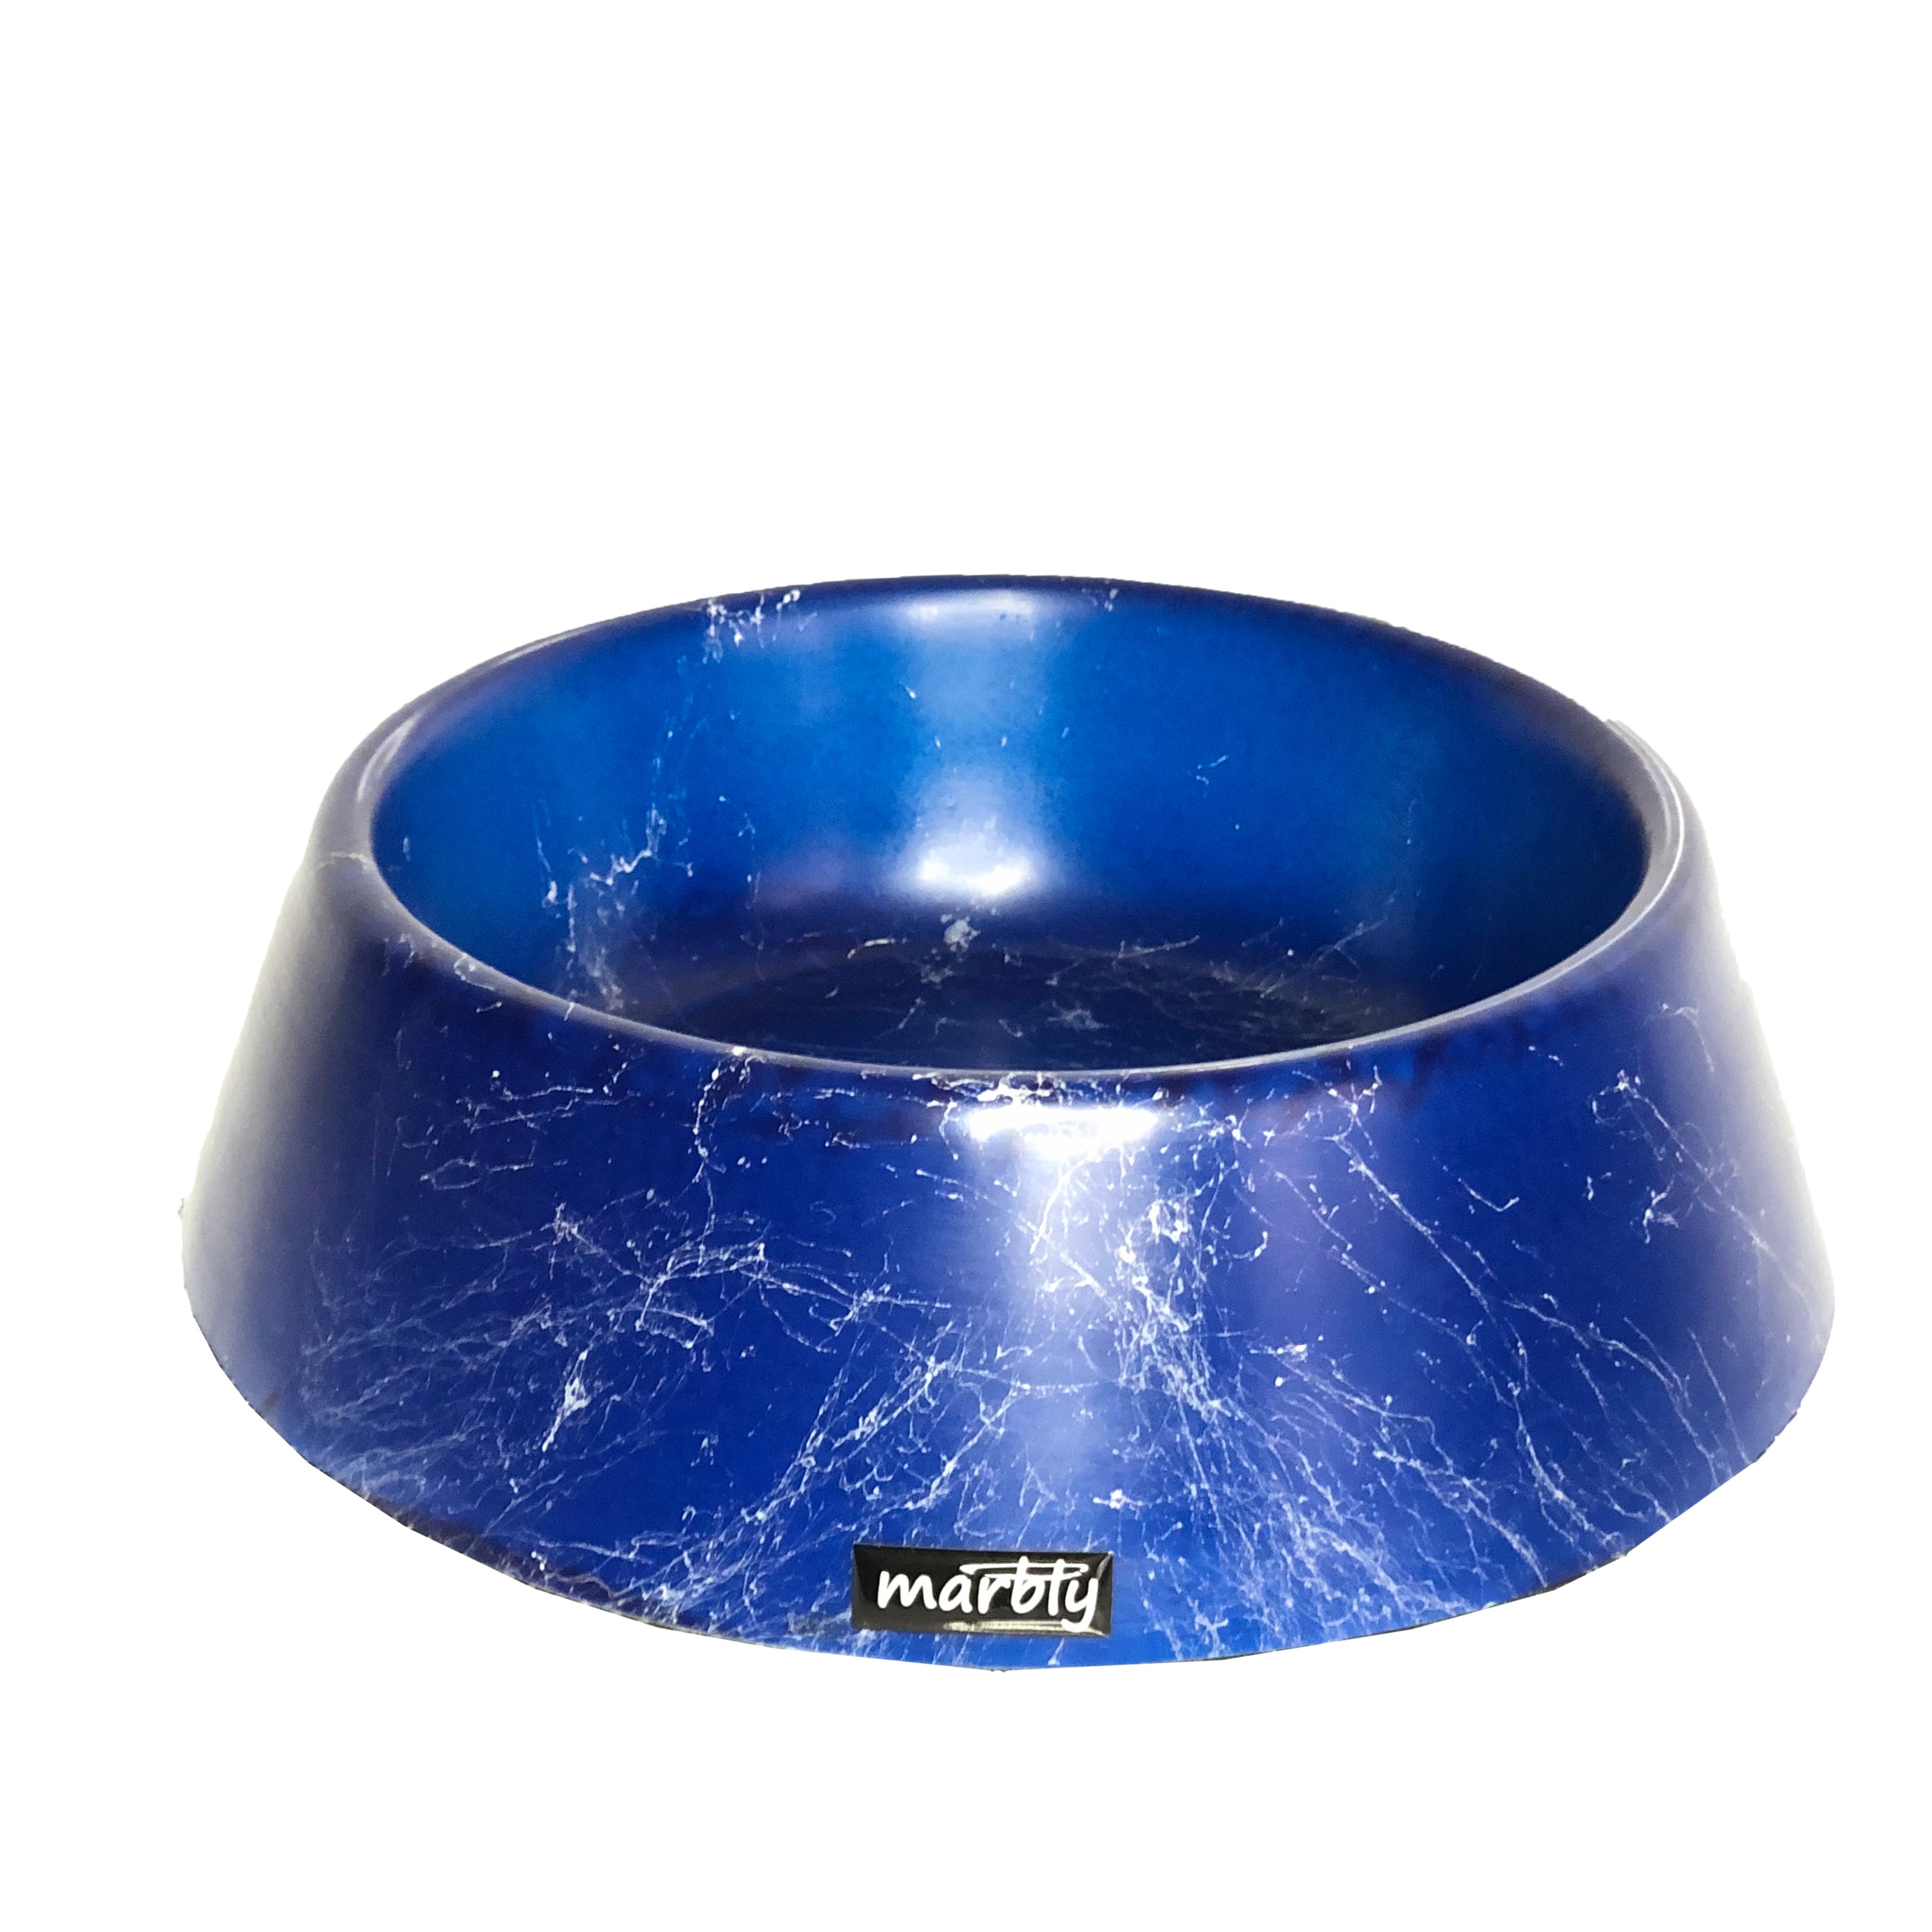 Marbly Mavi Dalgalı Mermerit Köpek Mama Su Kabı 700 ml